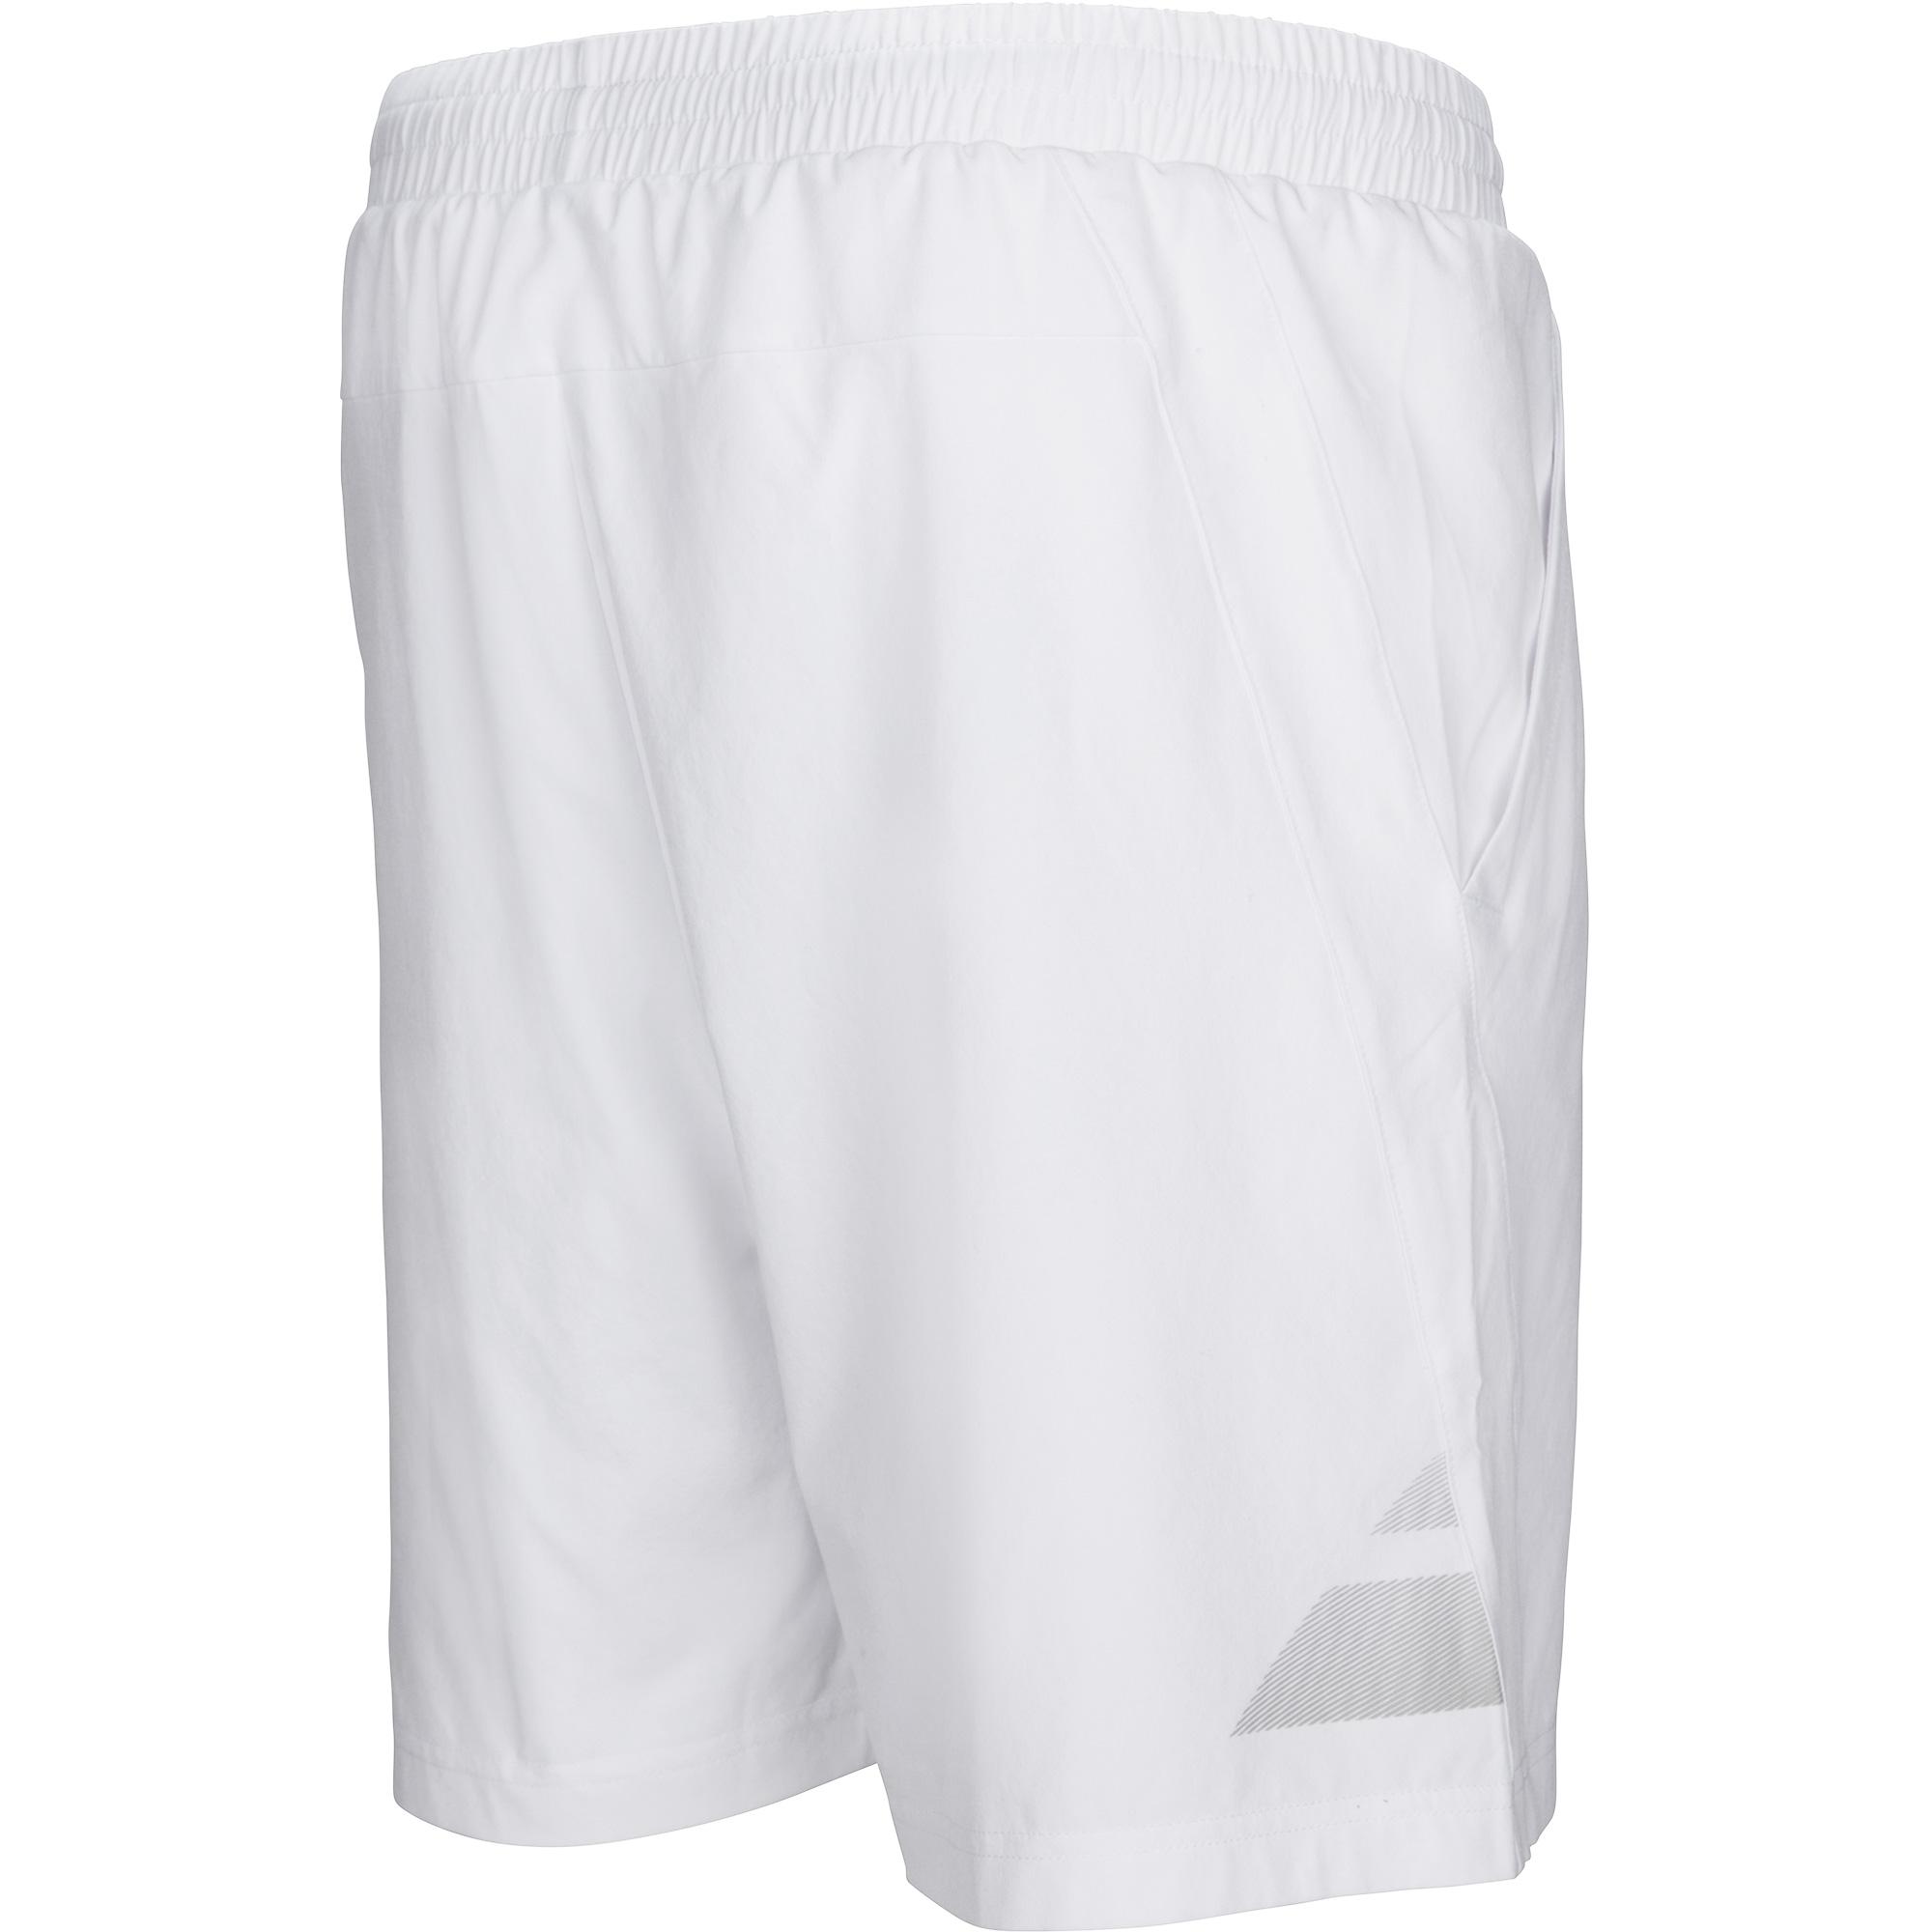 Babolat Men's Performance 7" Tennis Short (White)